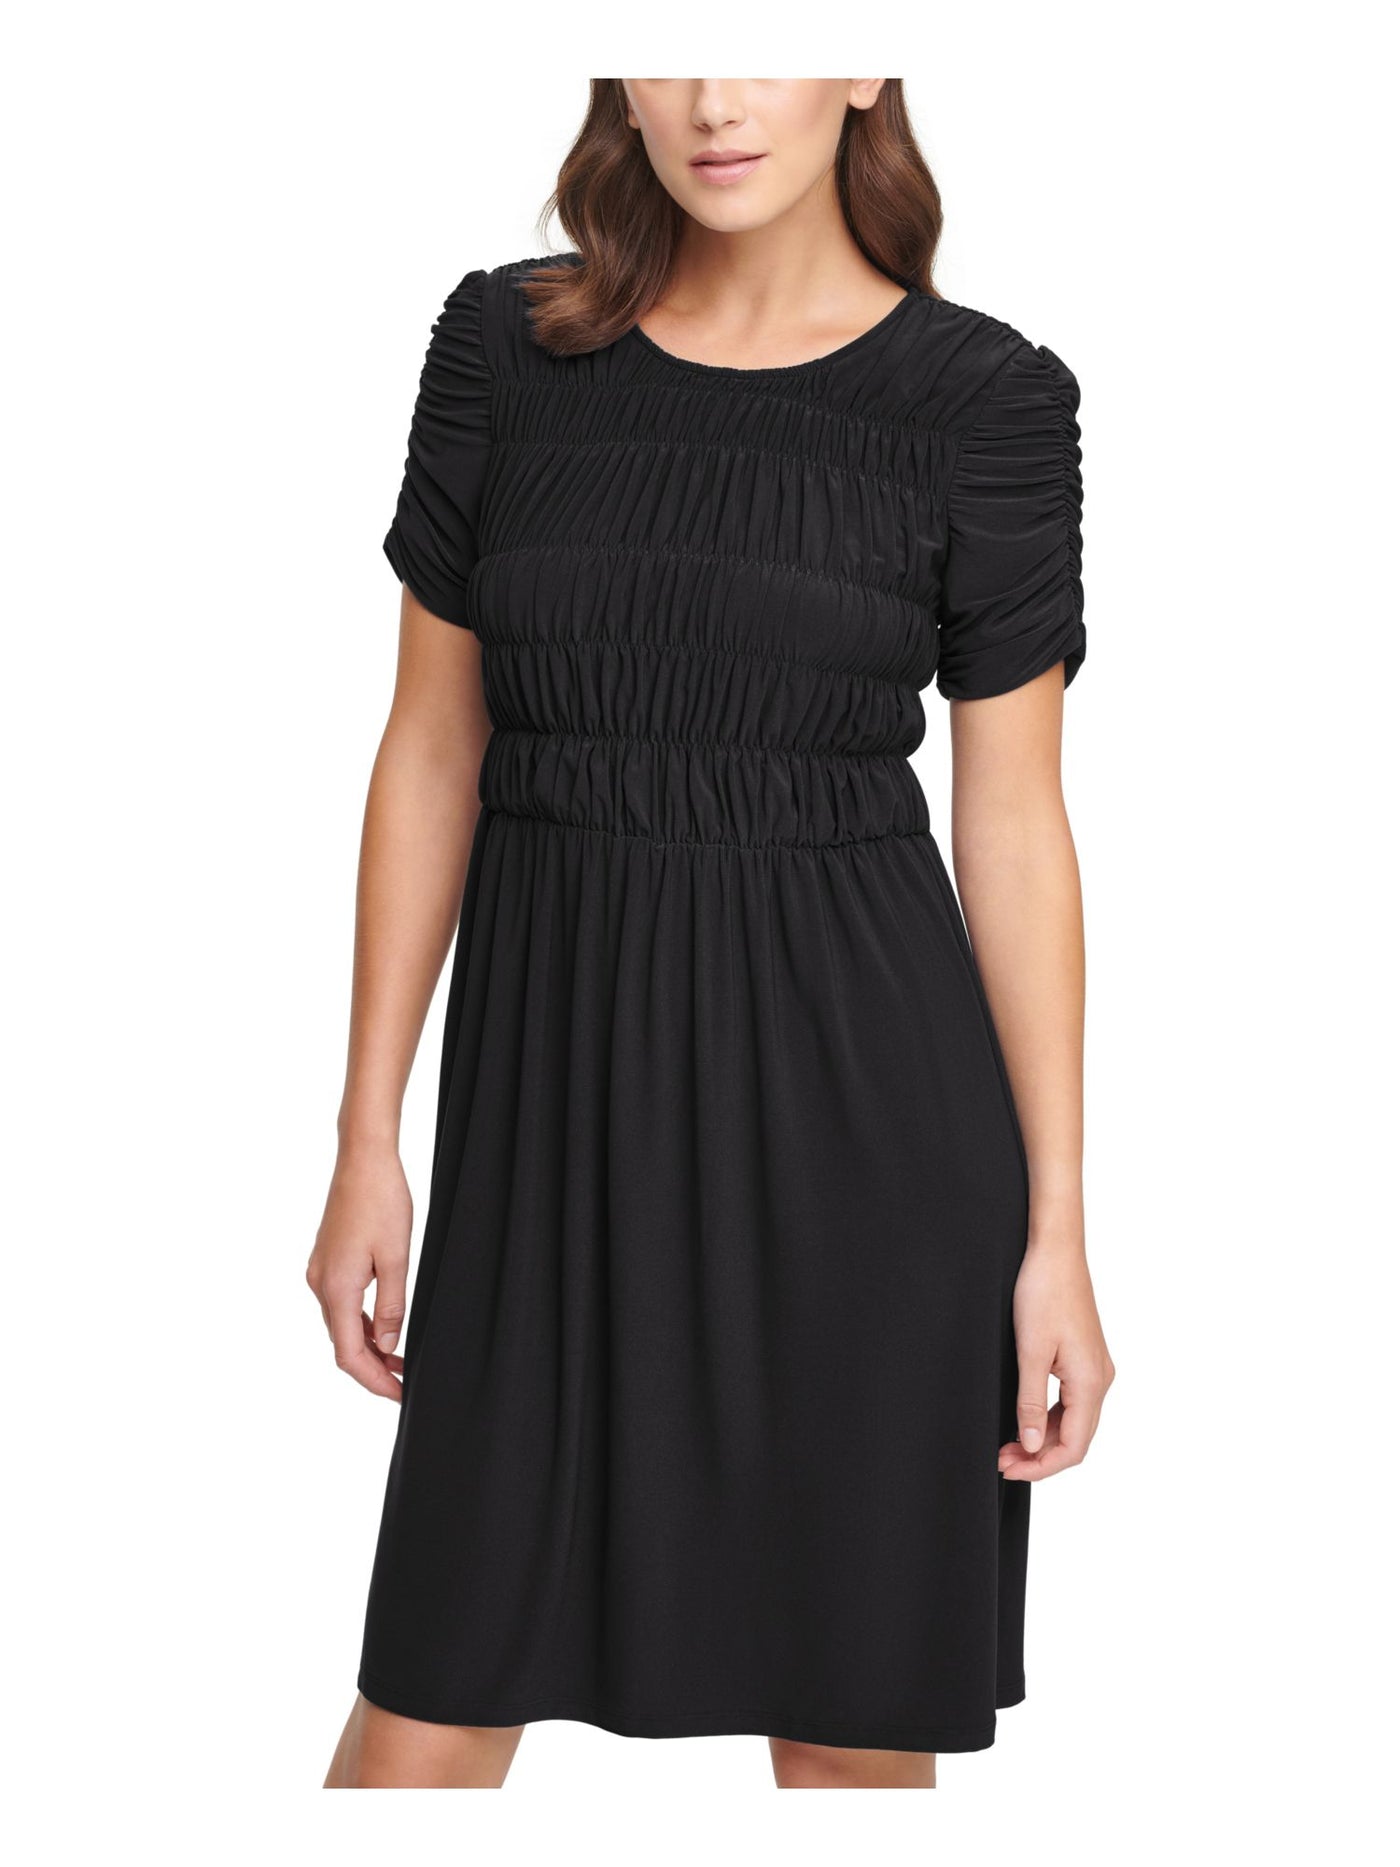 DKNY Womens Black Short Sleeve Above The Knee Fit + Flare Dress Size: XXS